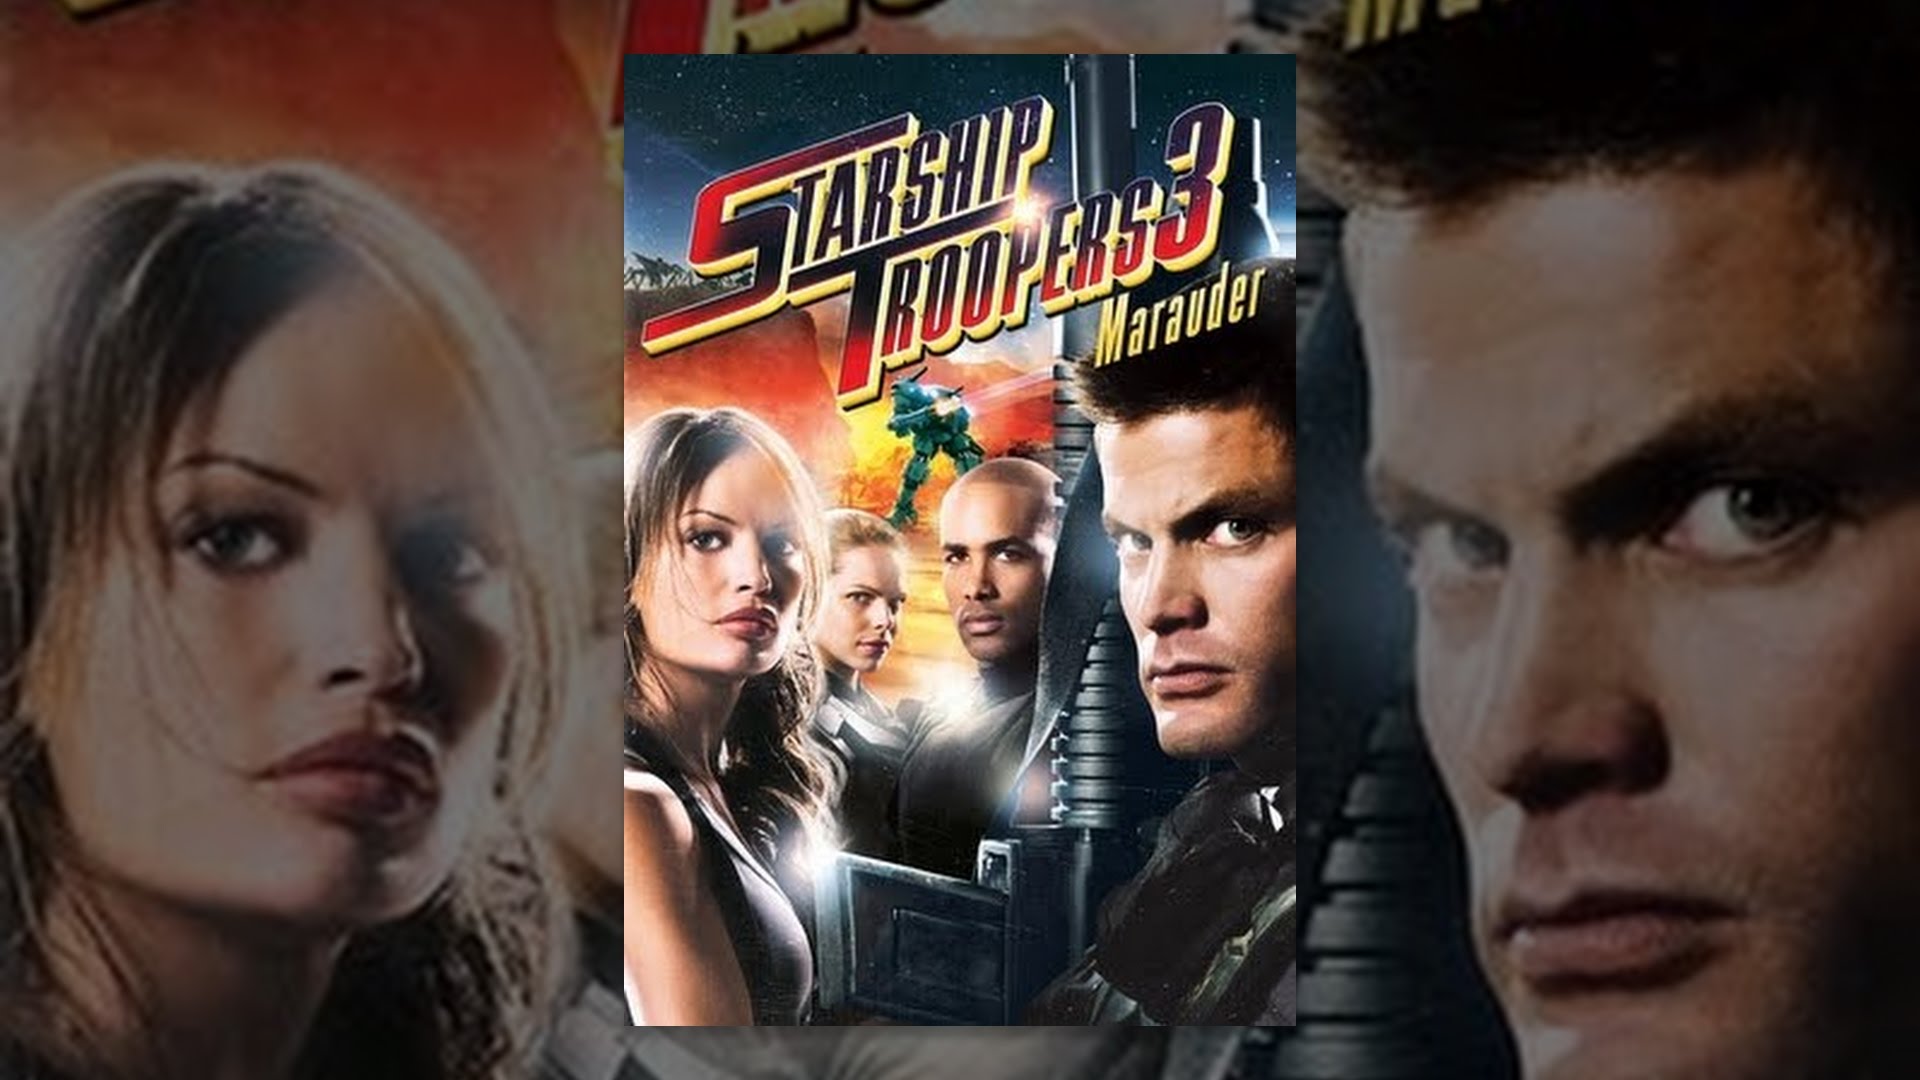 Download Starship Troopers 3: Marauder